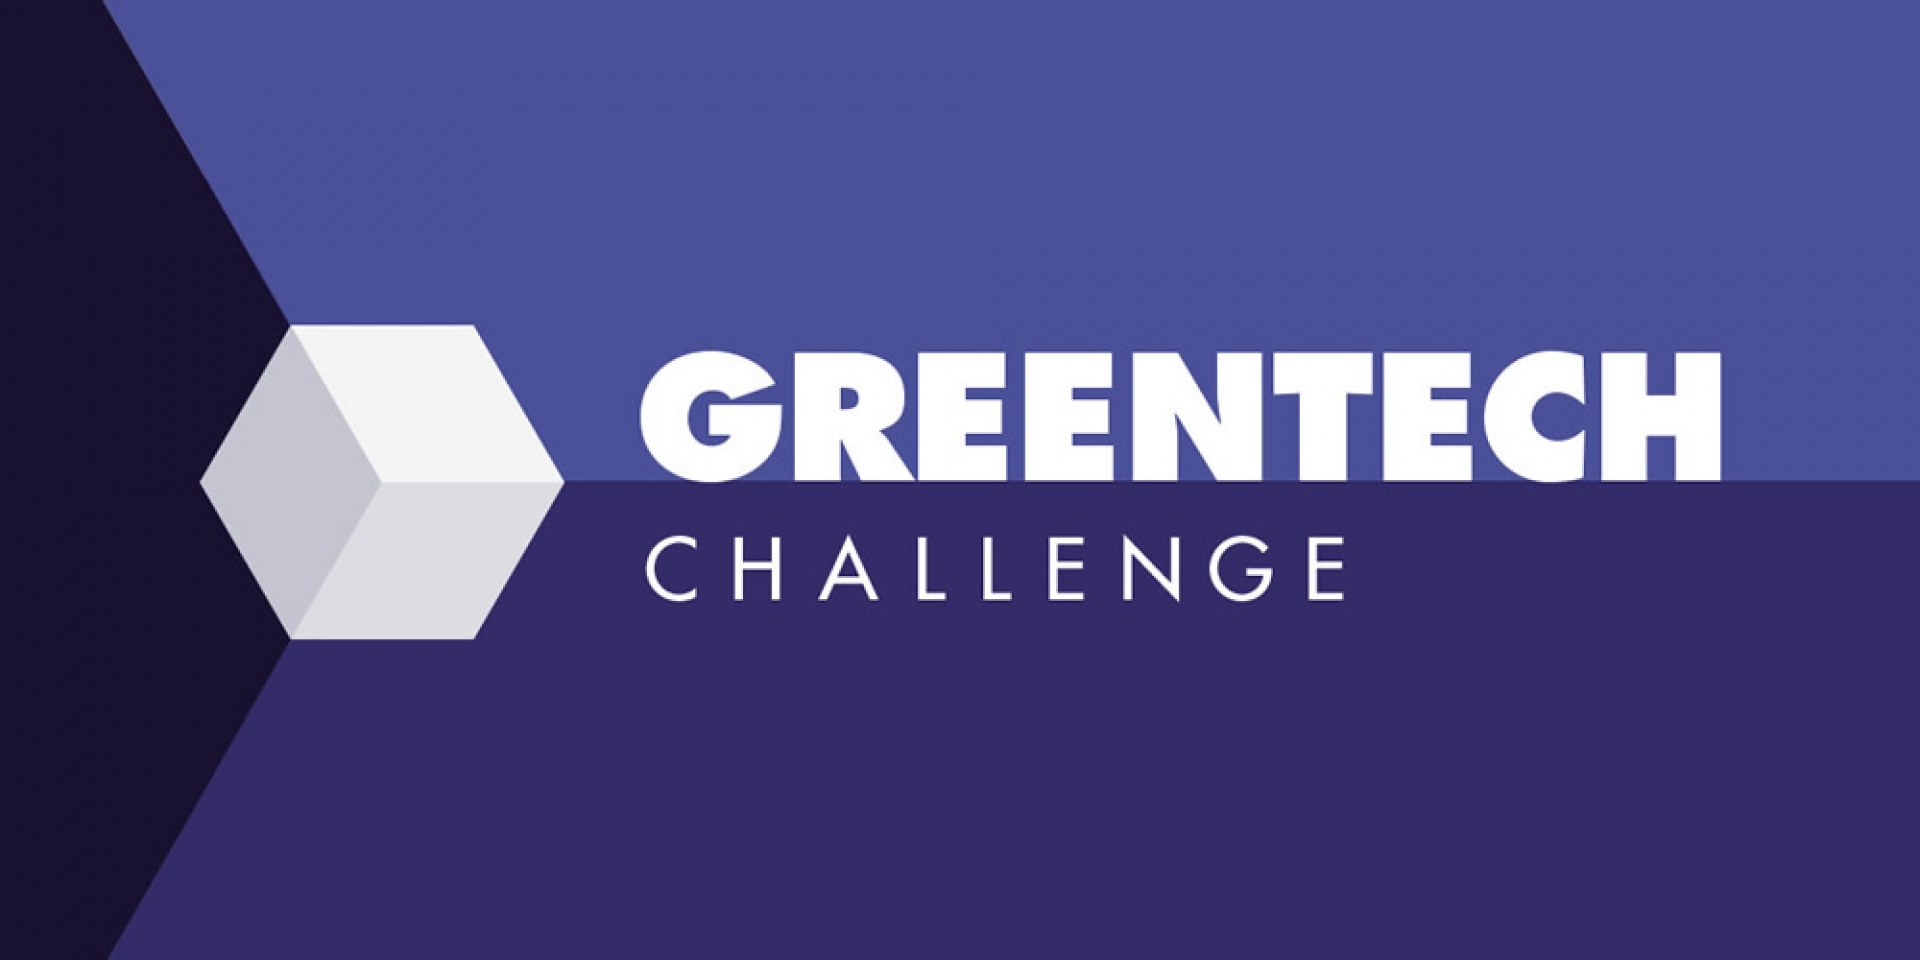 Greentech challenge